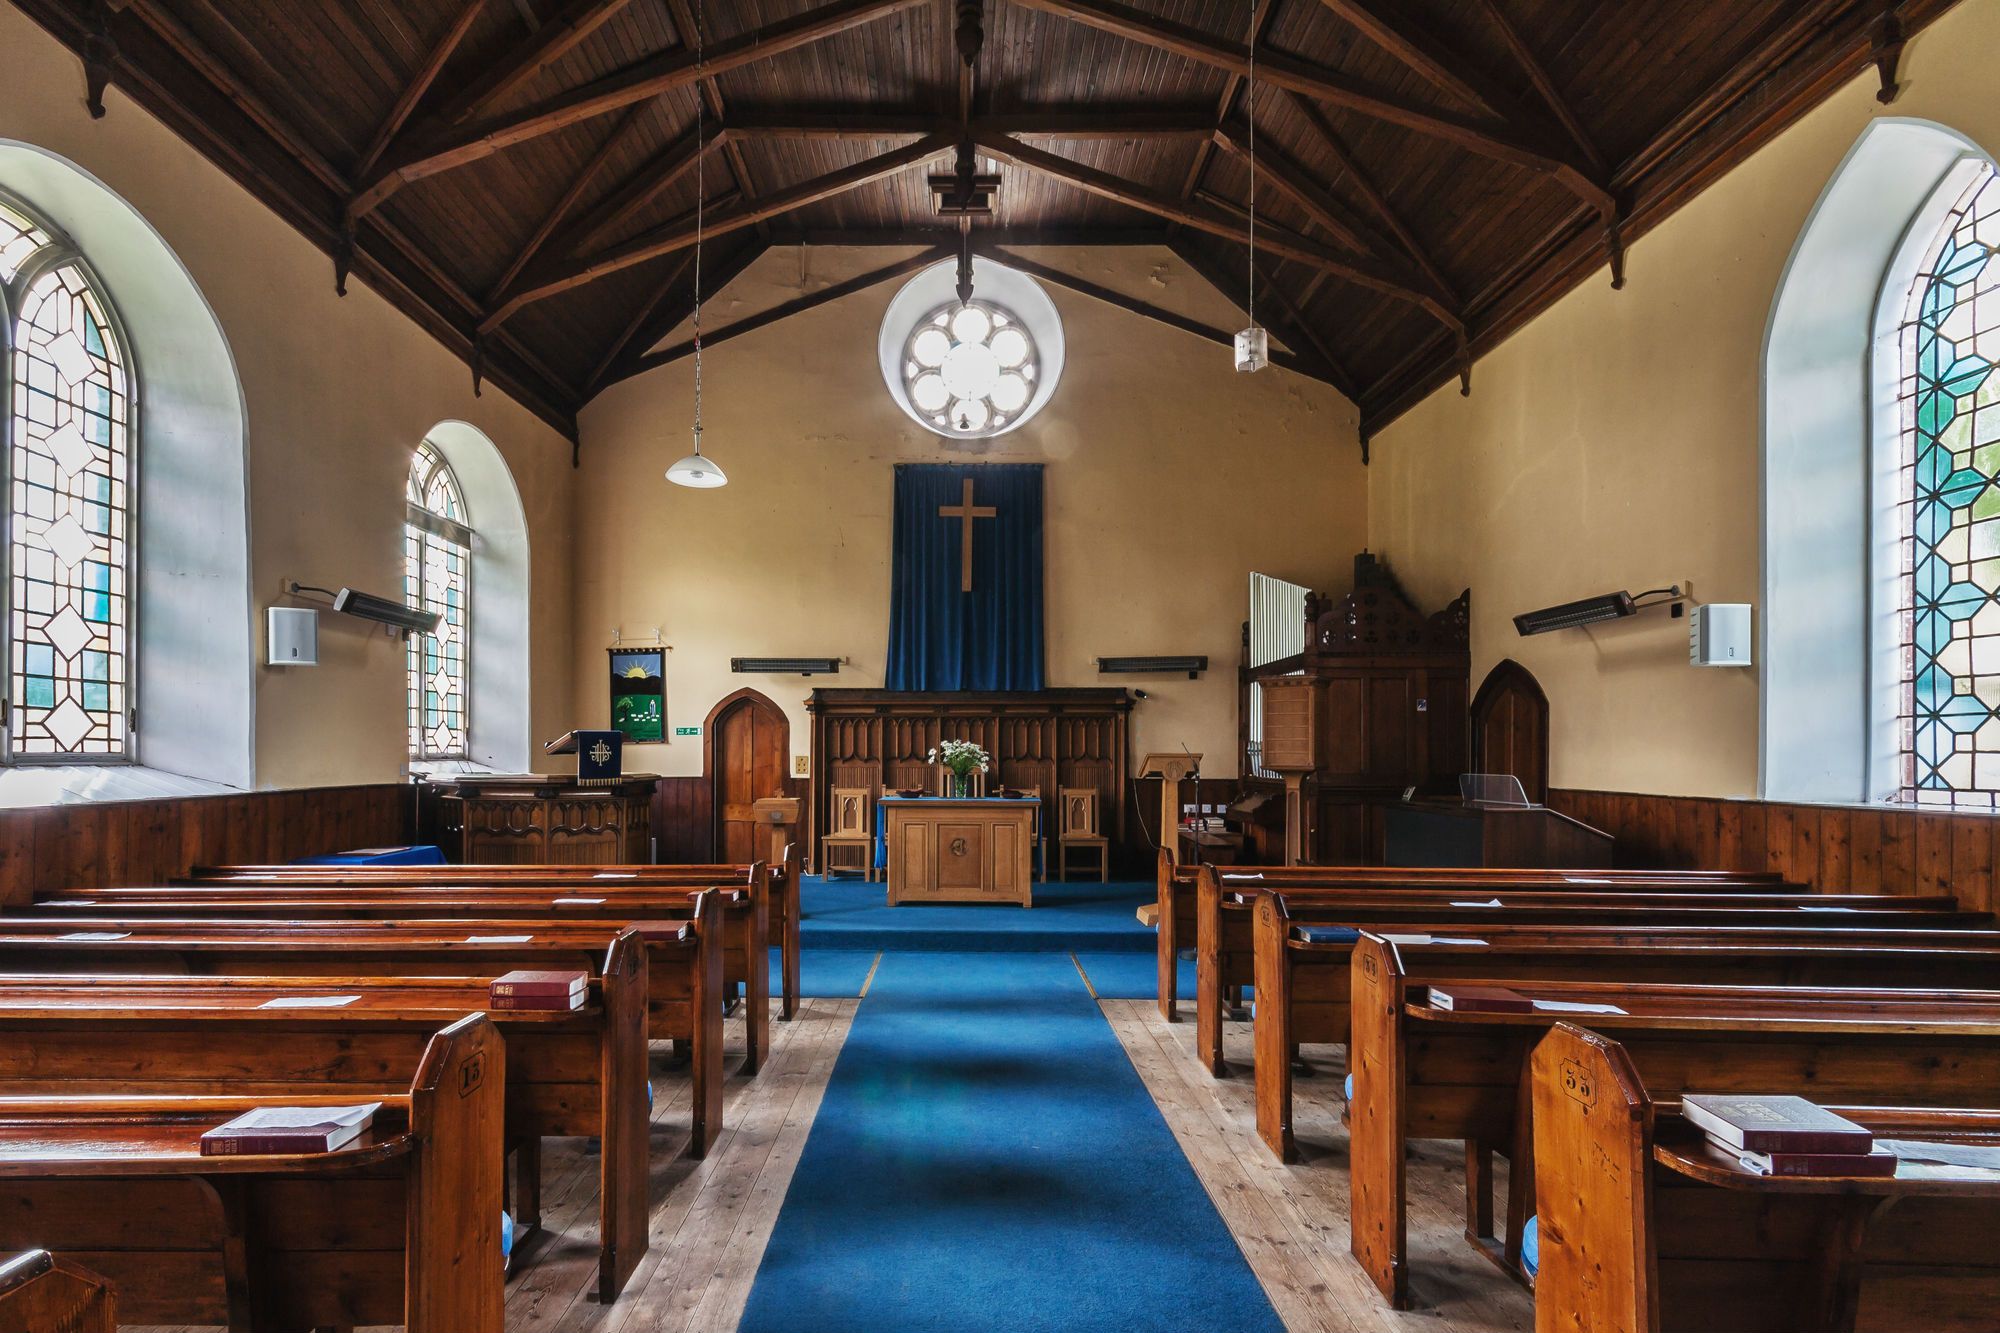 Interior of a Baptist church